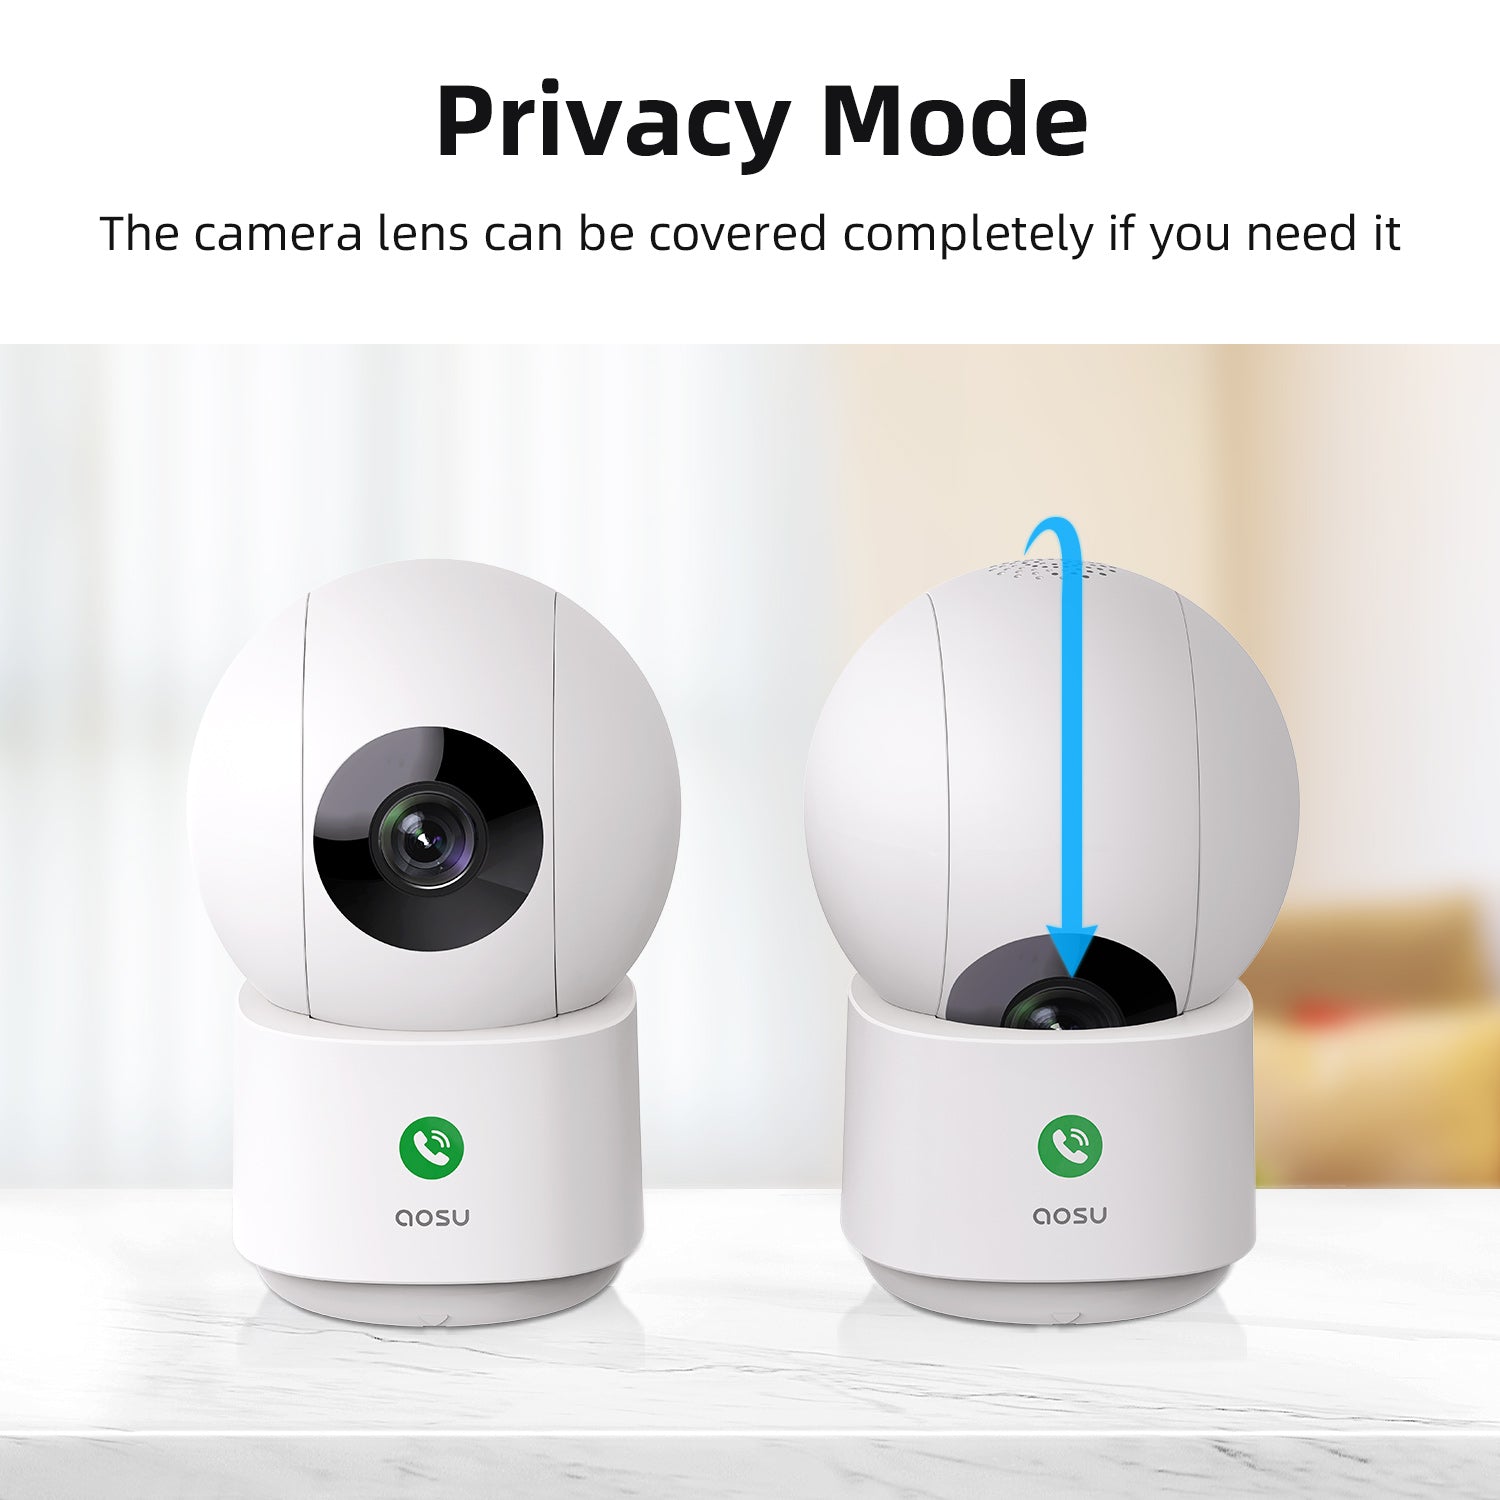 IndoorCam P1 features privacy mode